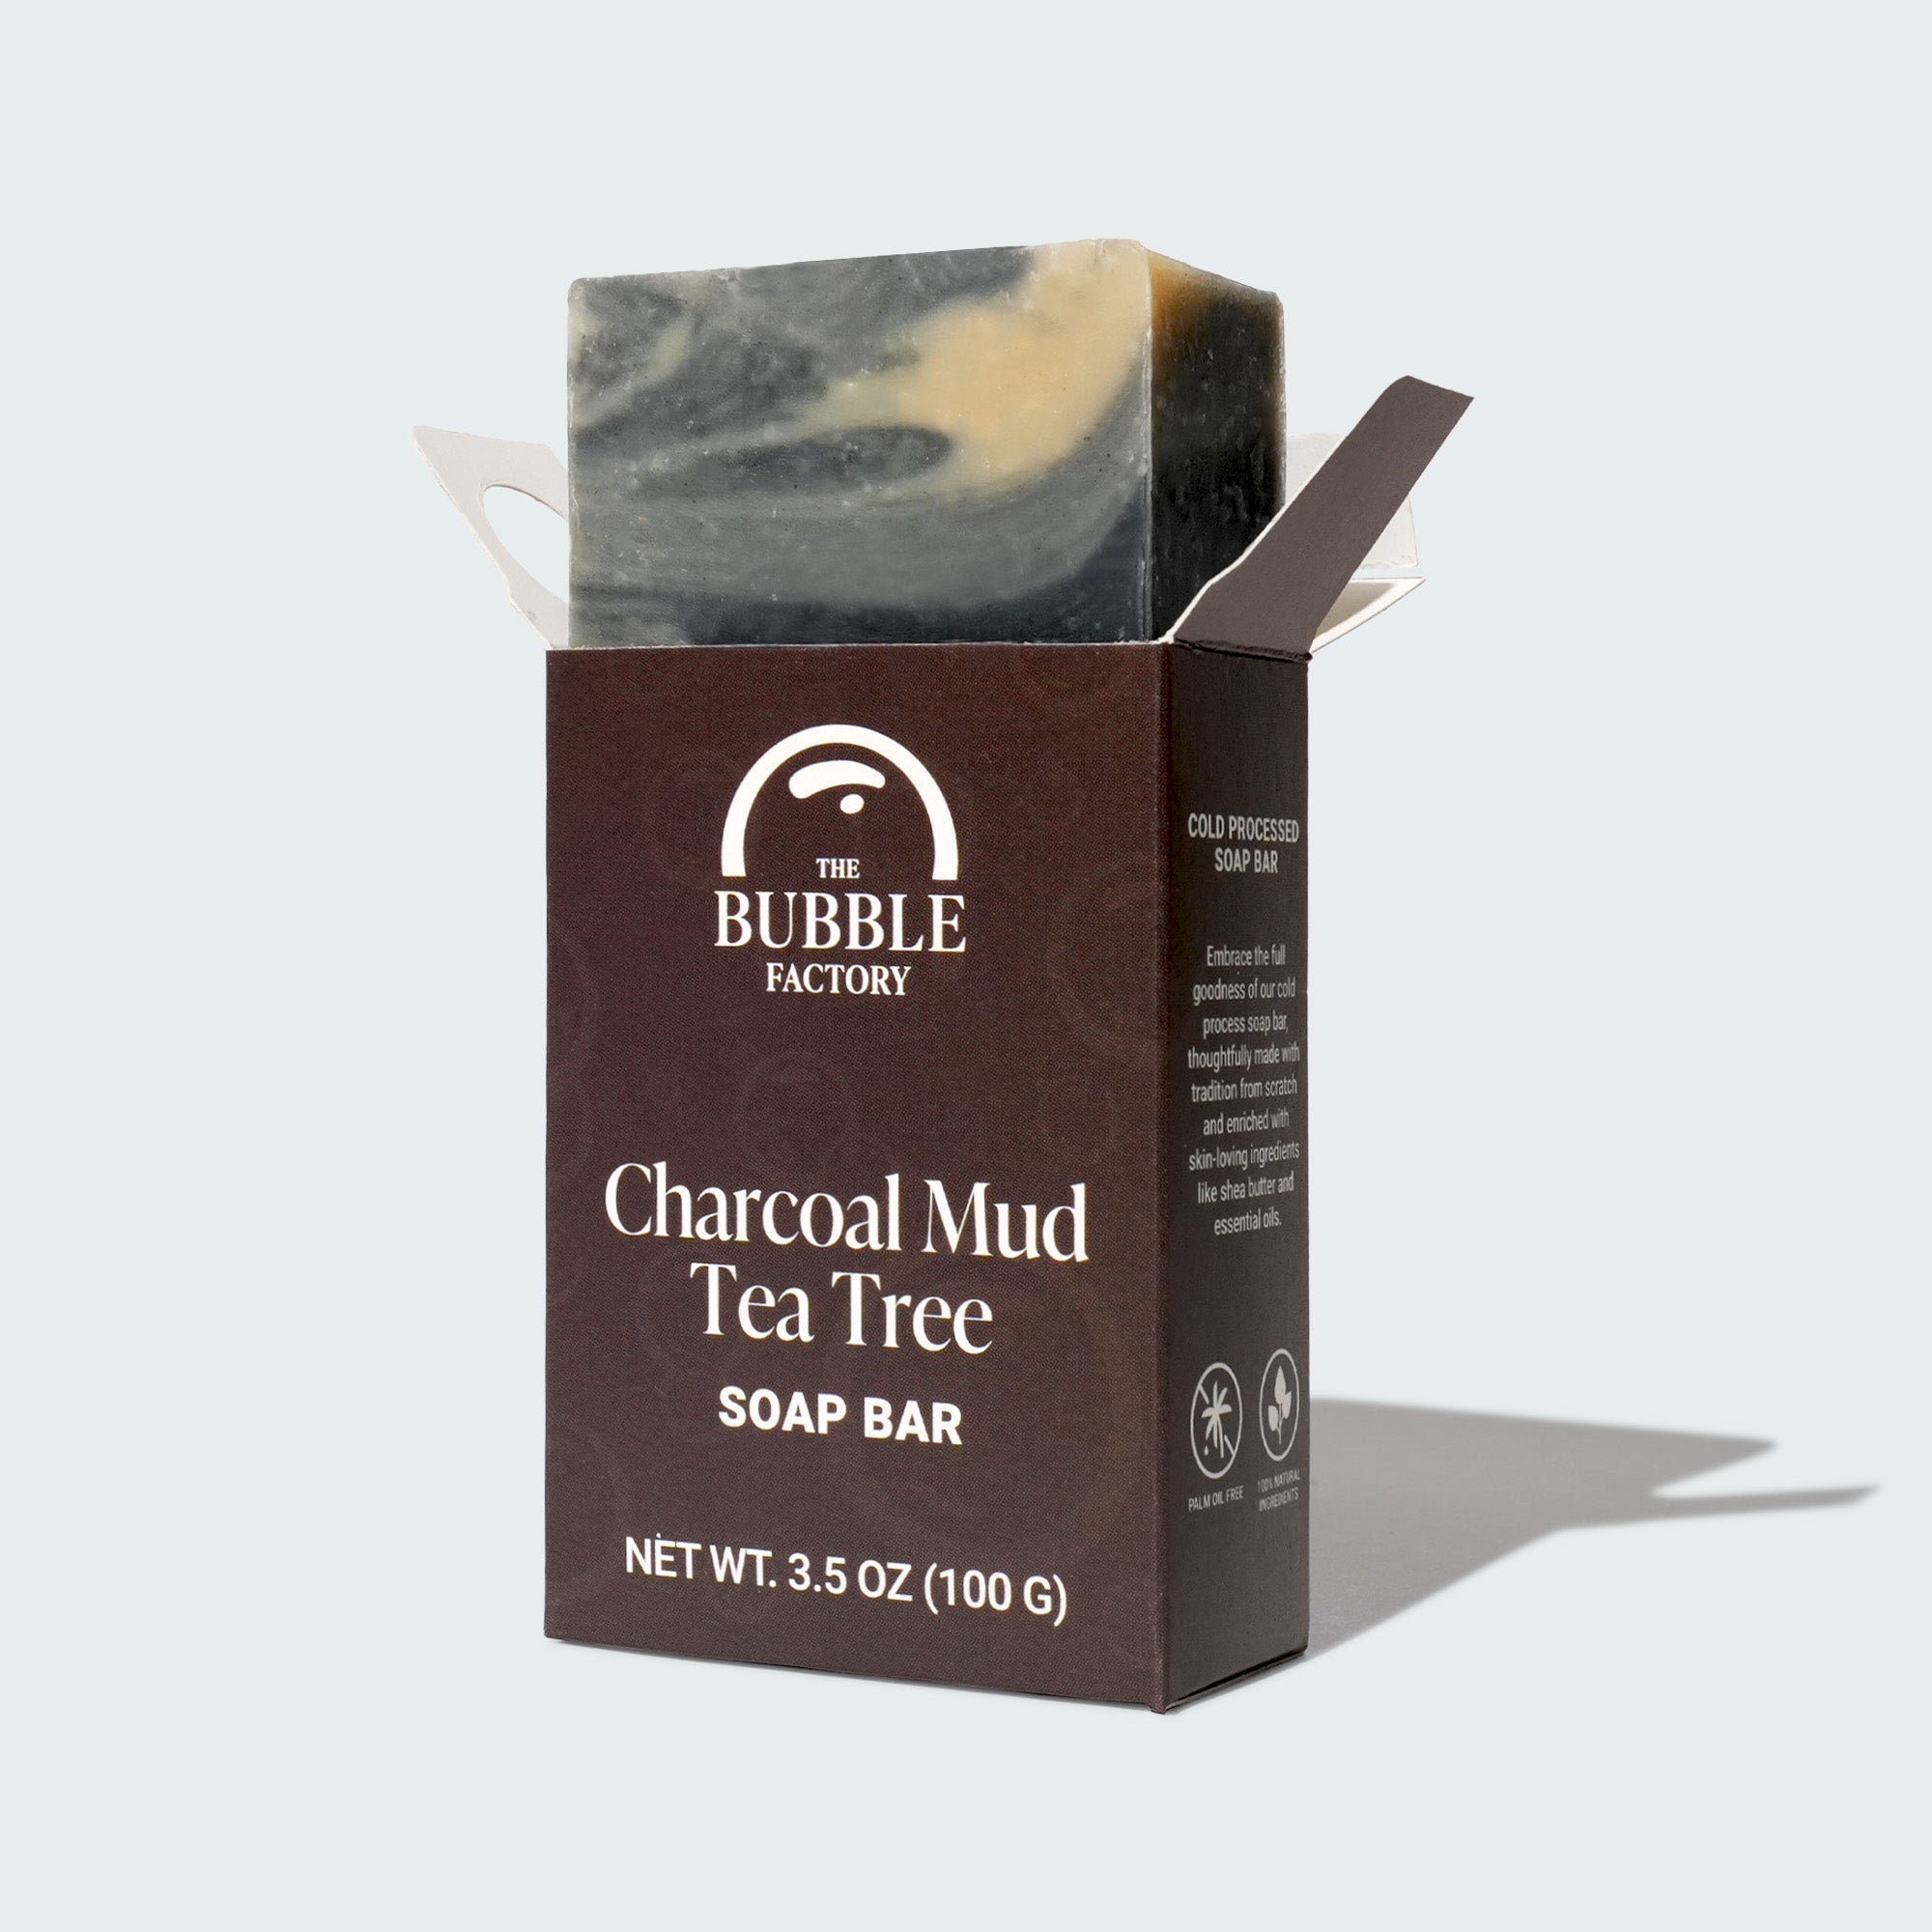 Charcoal Mud Tea Tree Soap Bar, Single Box 3D View